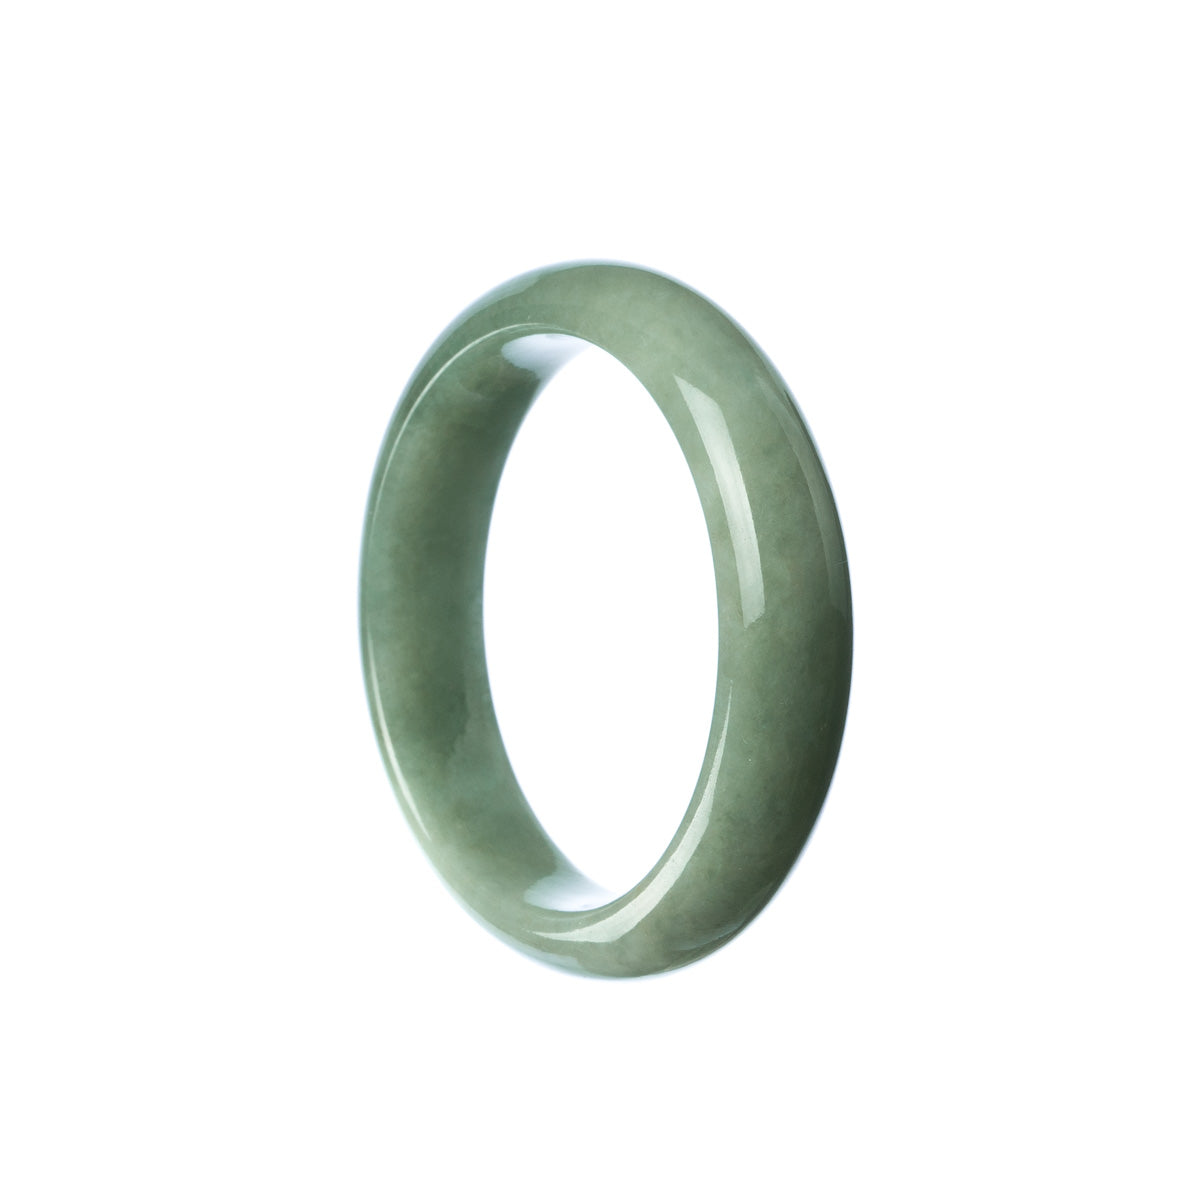 A round, child-sized genuine Grade A Green Jadeite Jade bangle from MAYS GEMS.